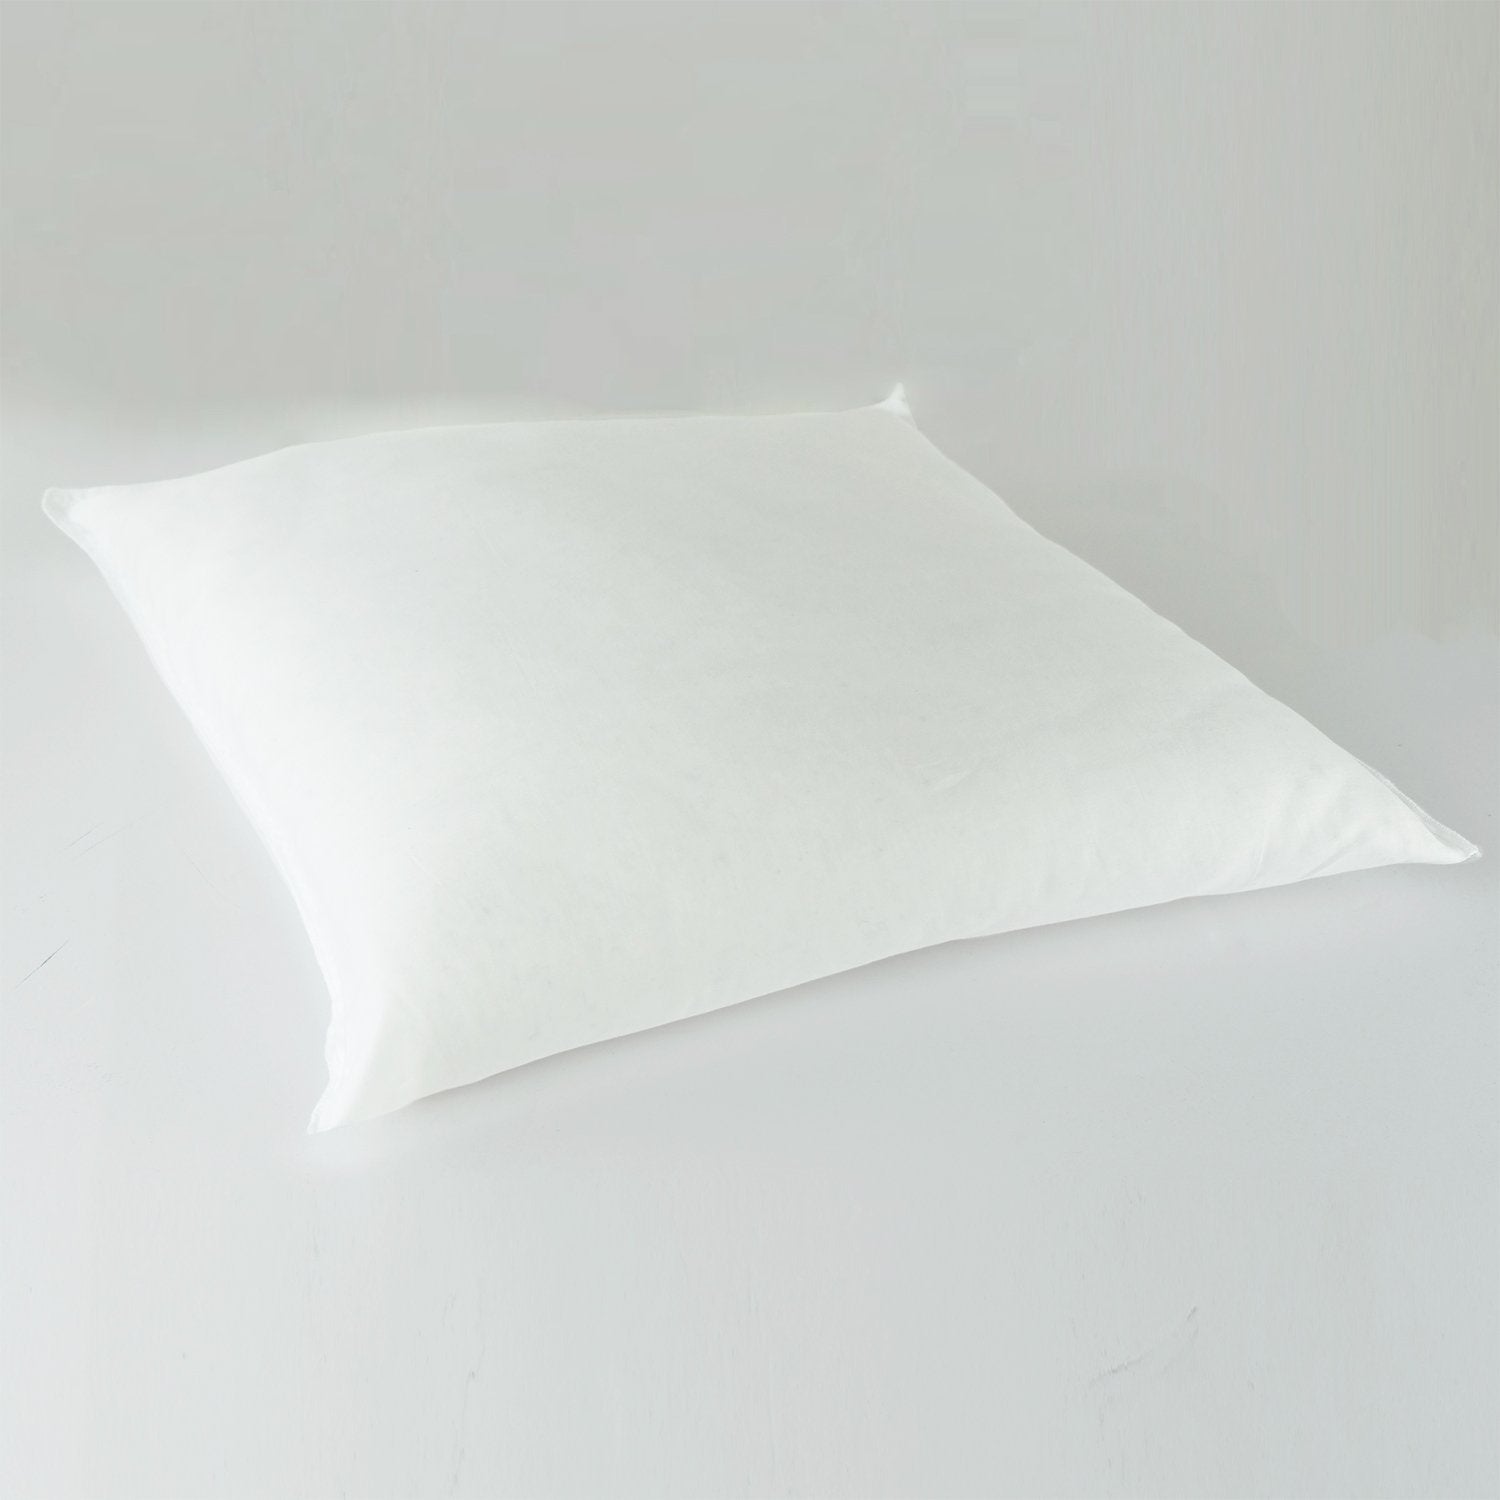 J-Life Seikai Ha Red Zabuton Floor Pillow_Pillows & Shams_Zabuton Floor Pillows_100% Cotton_Reversible_Handmade